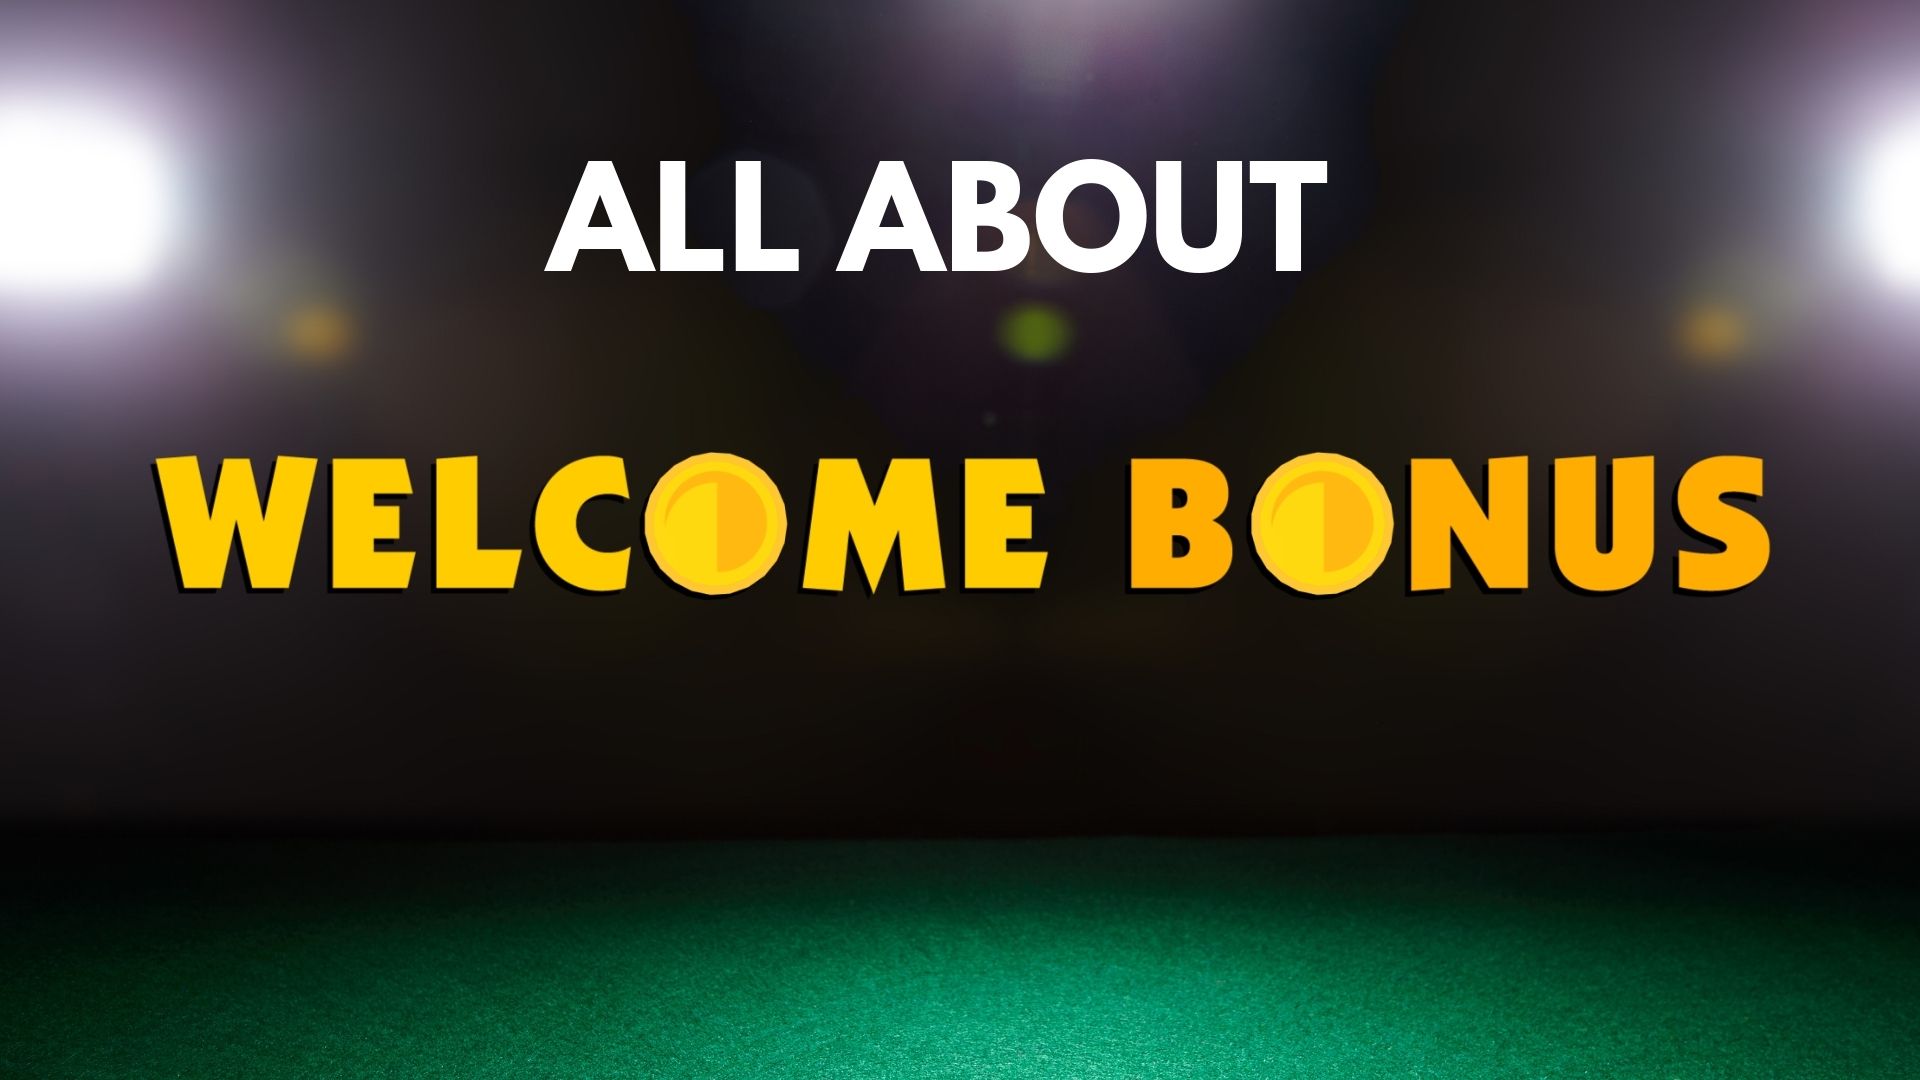 888 casino welcome bonus terms